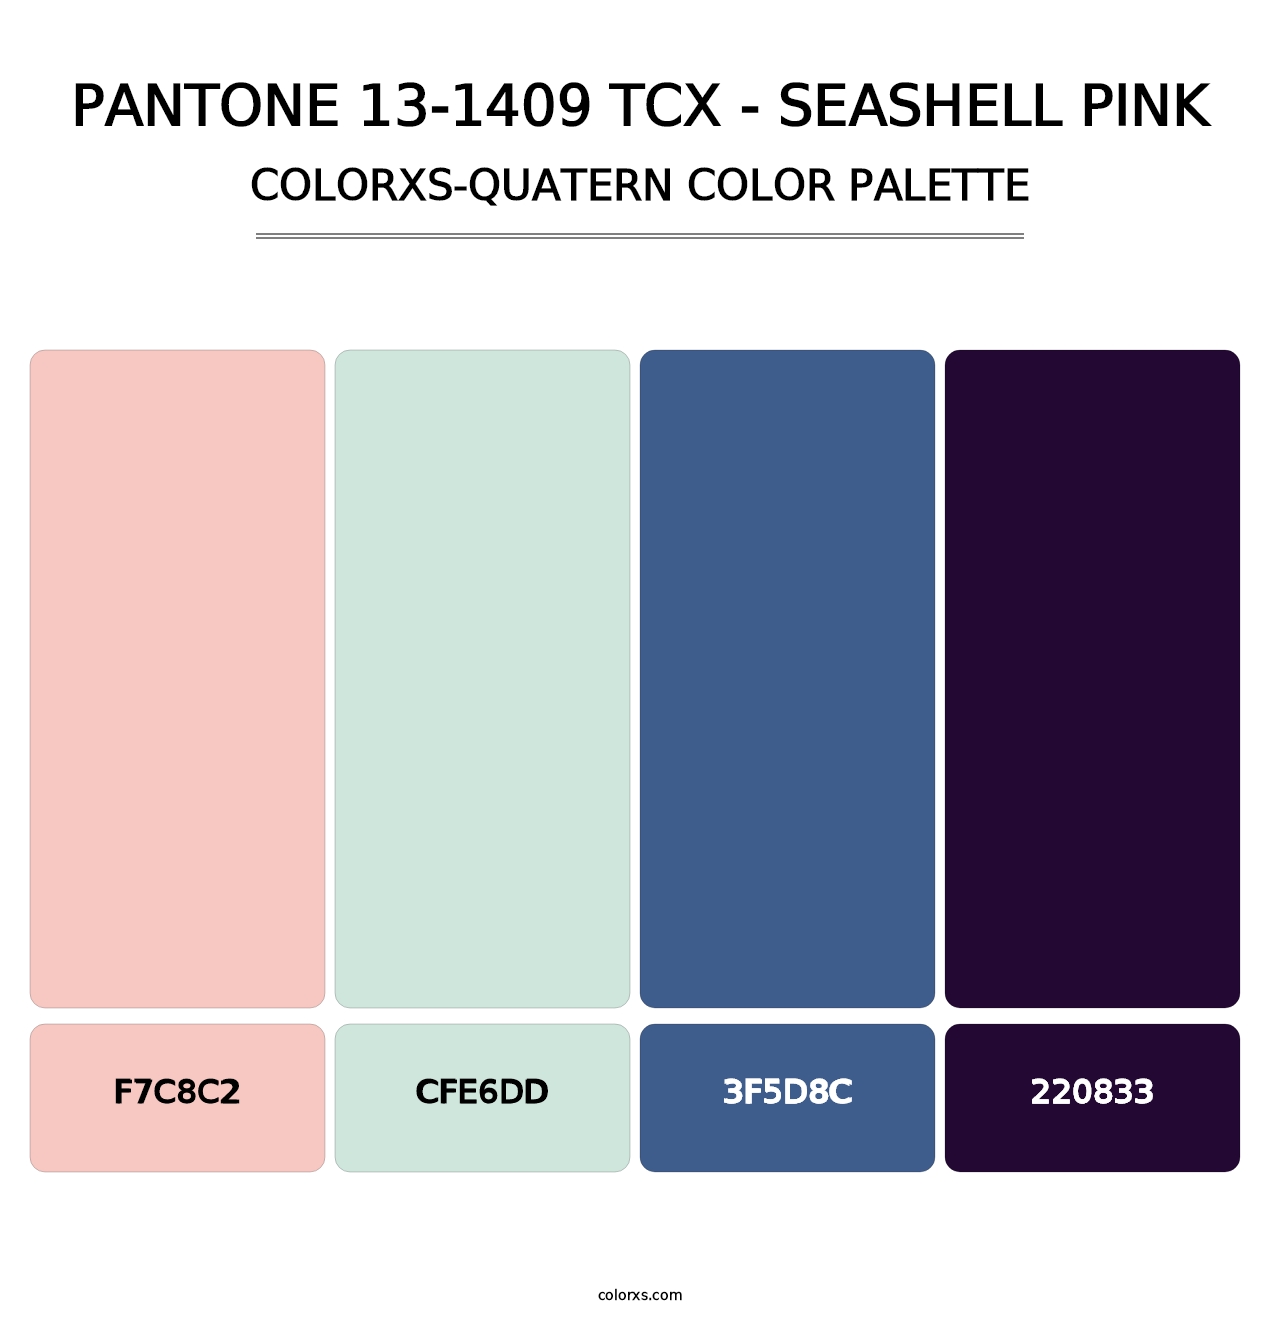 PANTONE 13-1409 TCX - Seashell Pink - Colorxs Quatern Palette